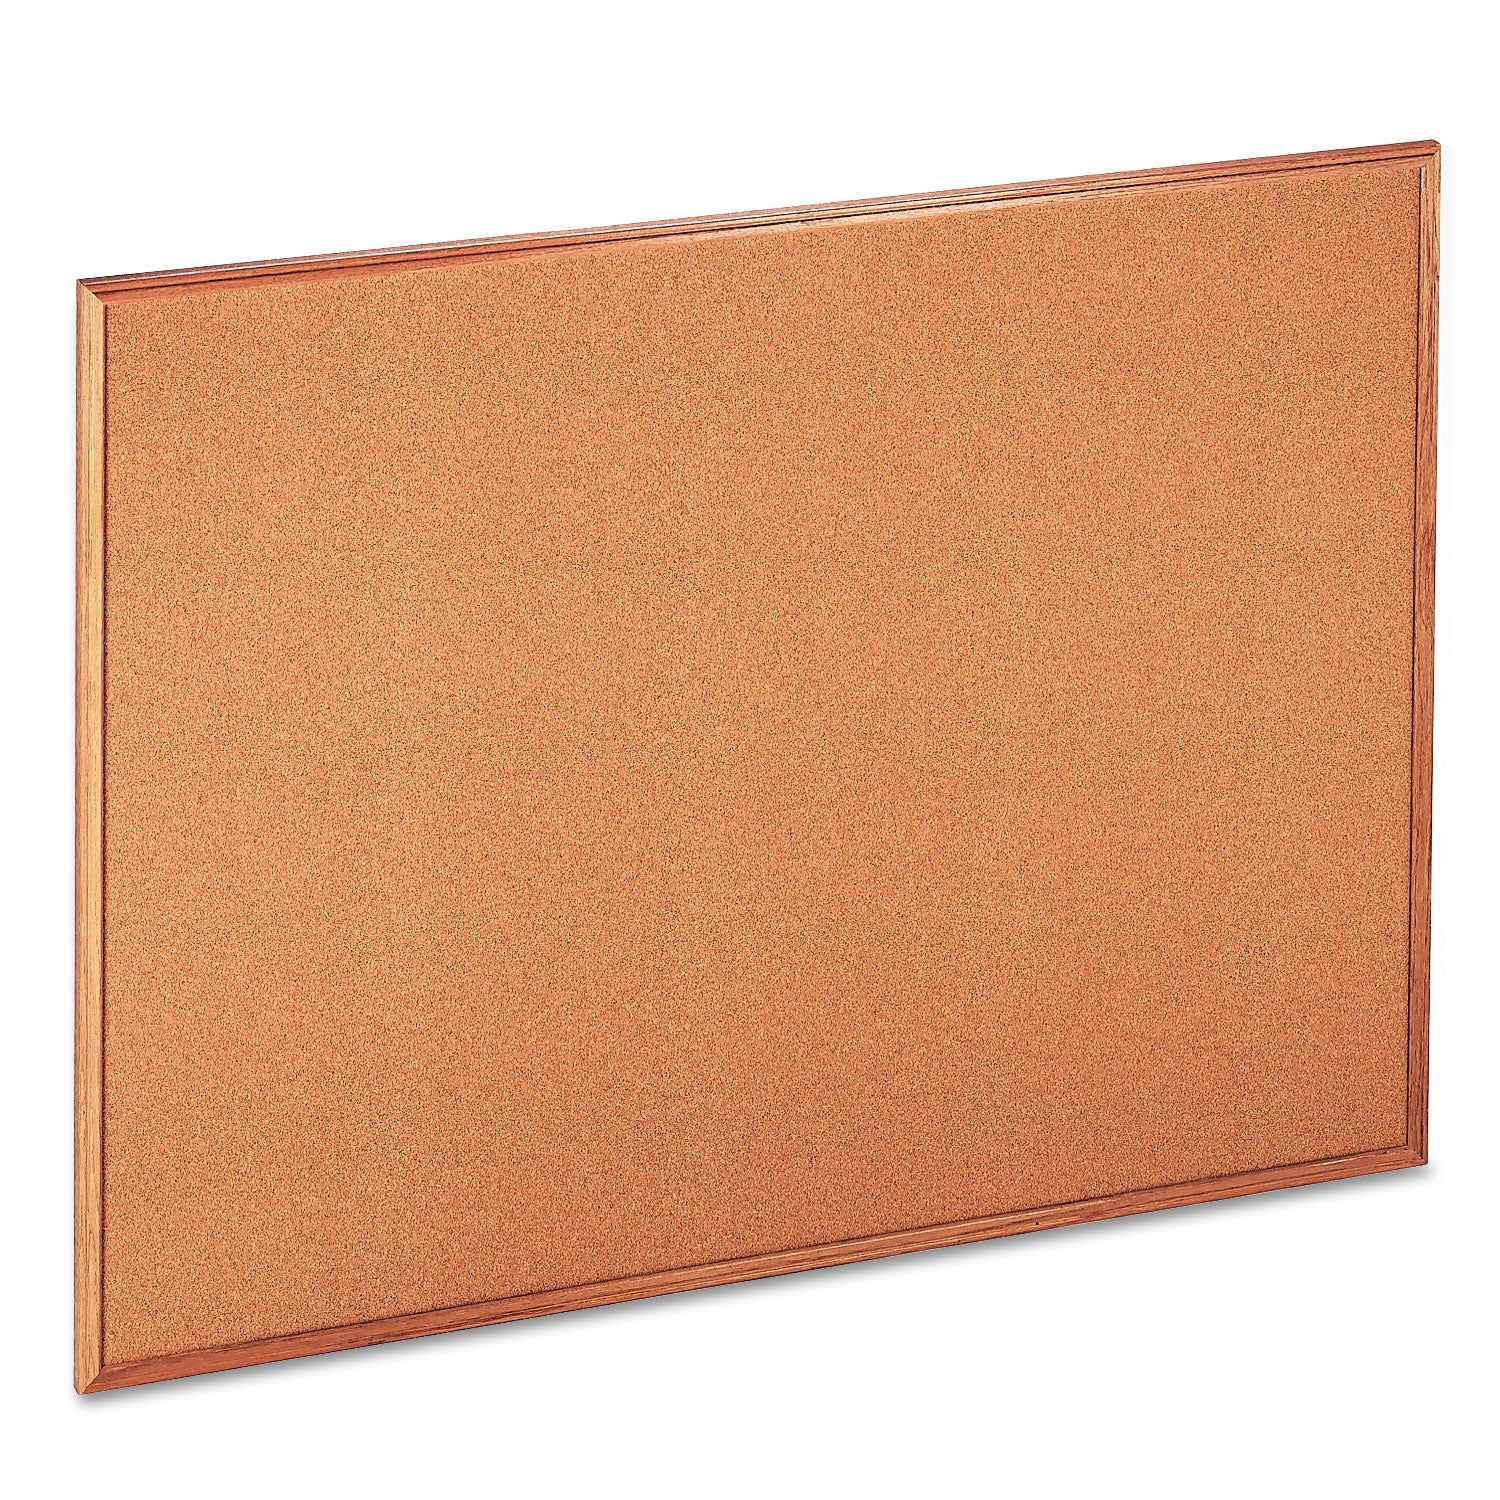 Cork Board with Oak Style Frame, 48 x 36, Tan Surface - 